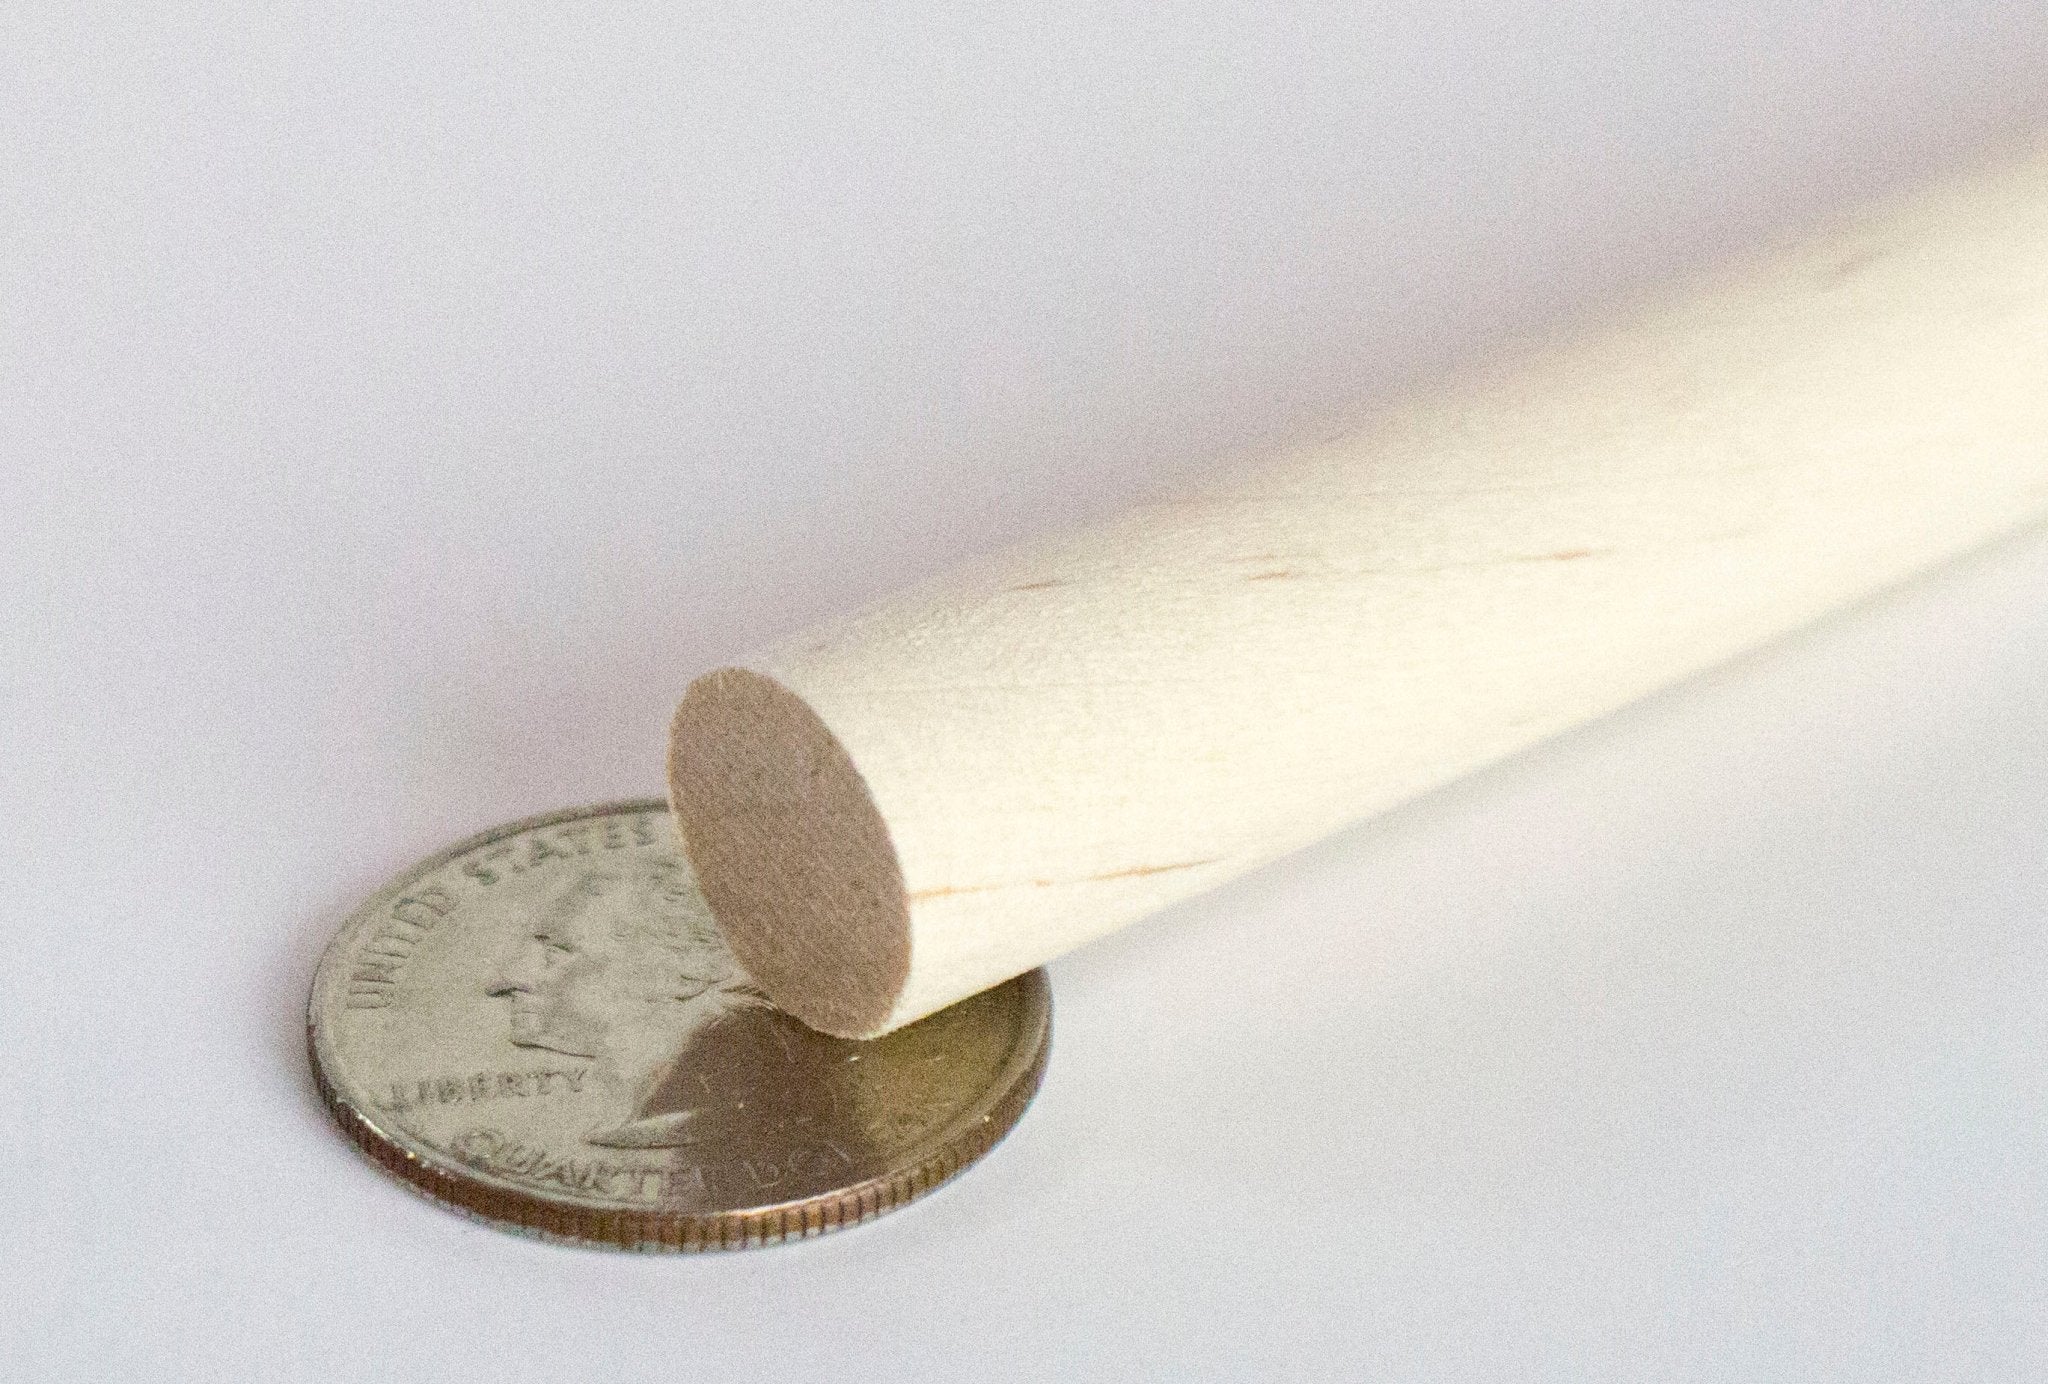 Wooden Round Dowel Rod- 1/2 x 12 (Dozen) – Mini Materials